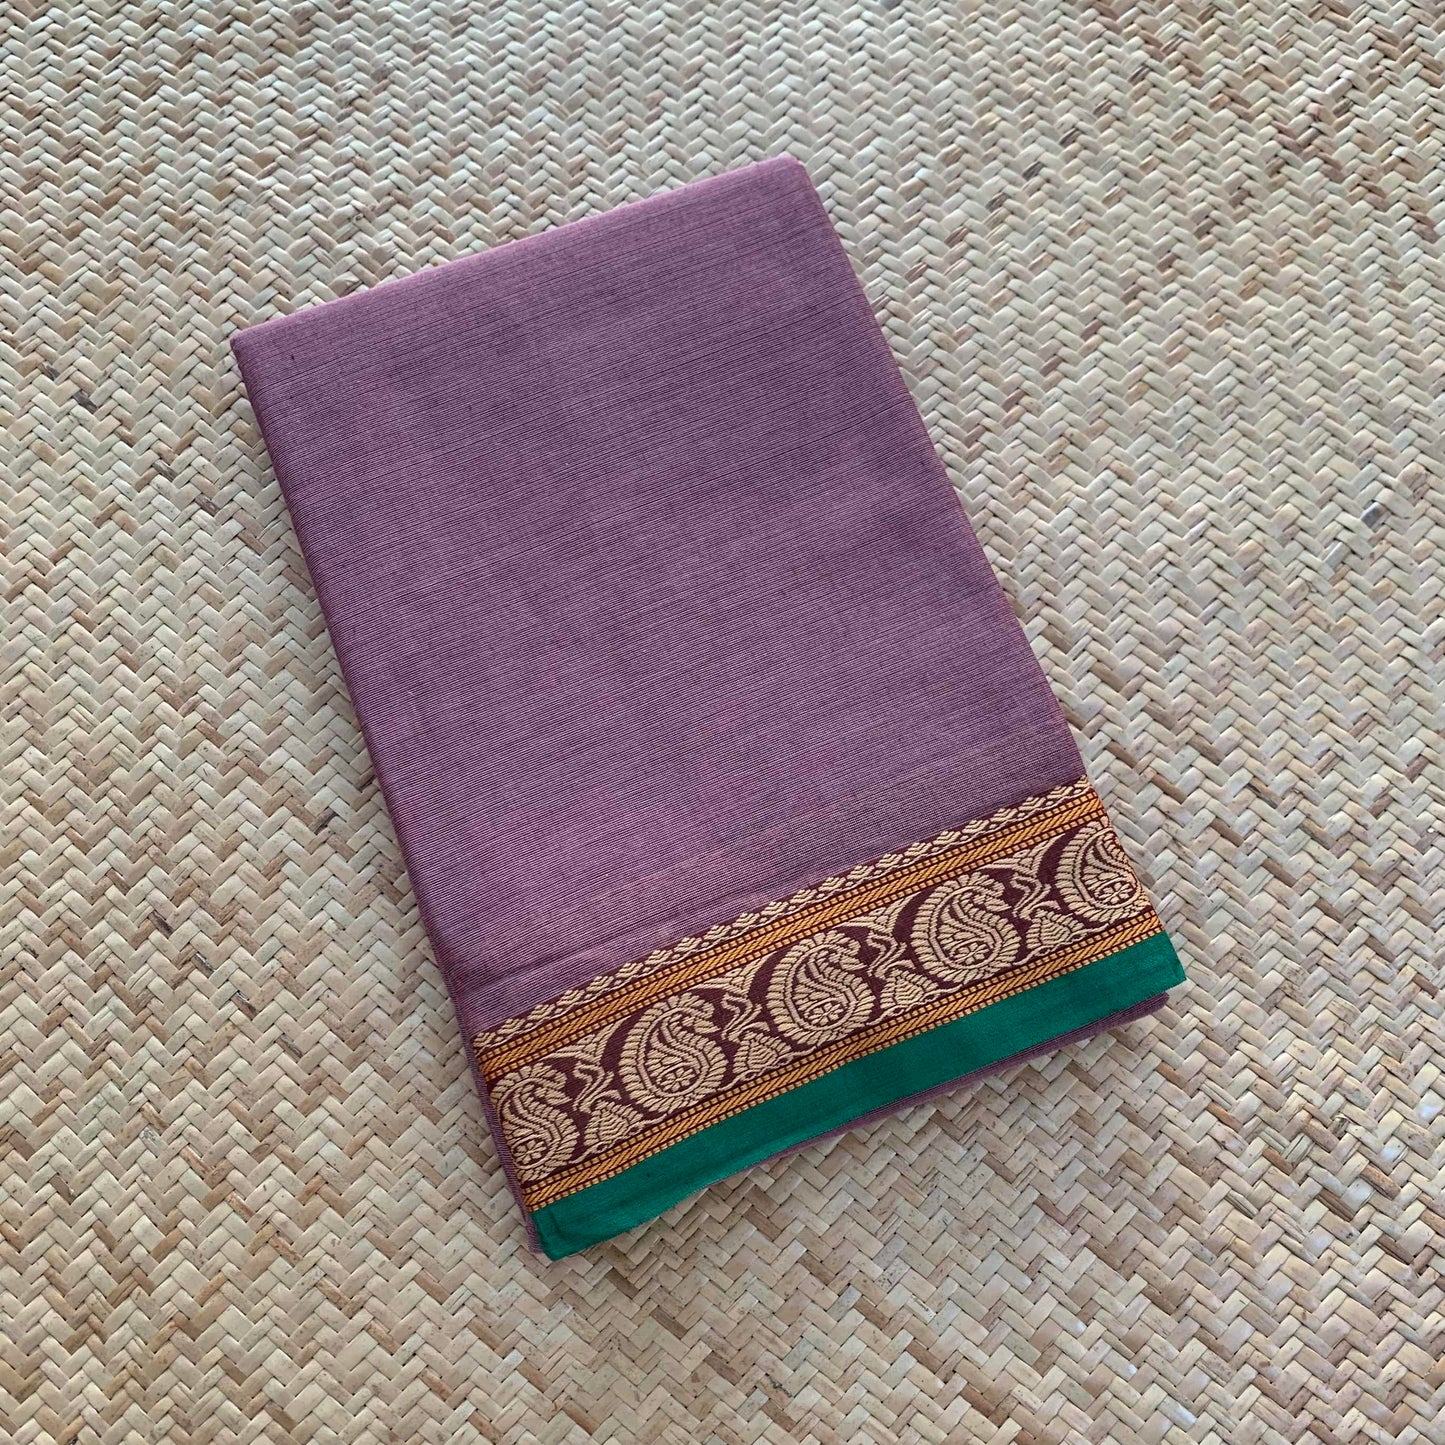 Purple Thread Border, Chettinad Cotton Saree